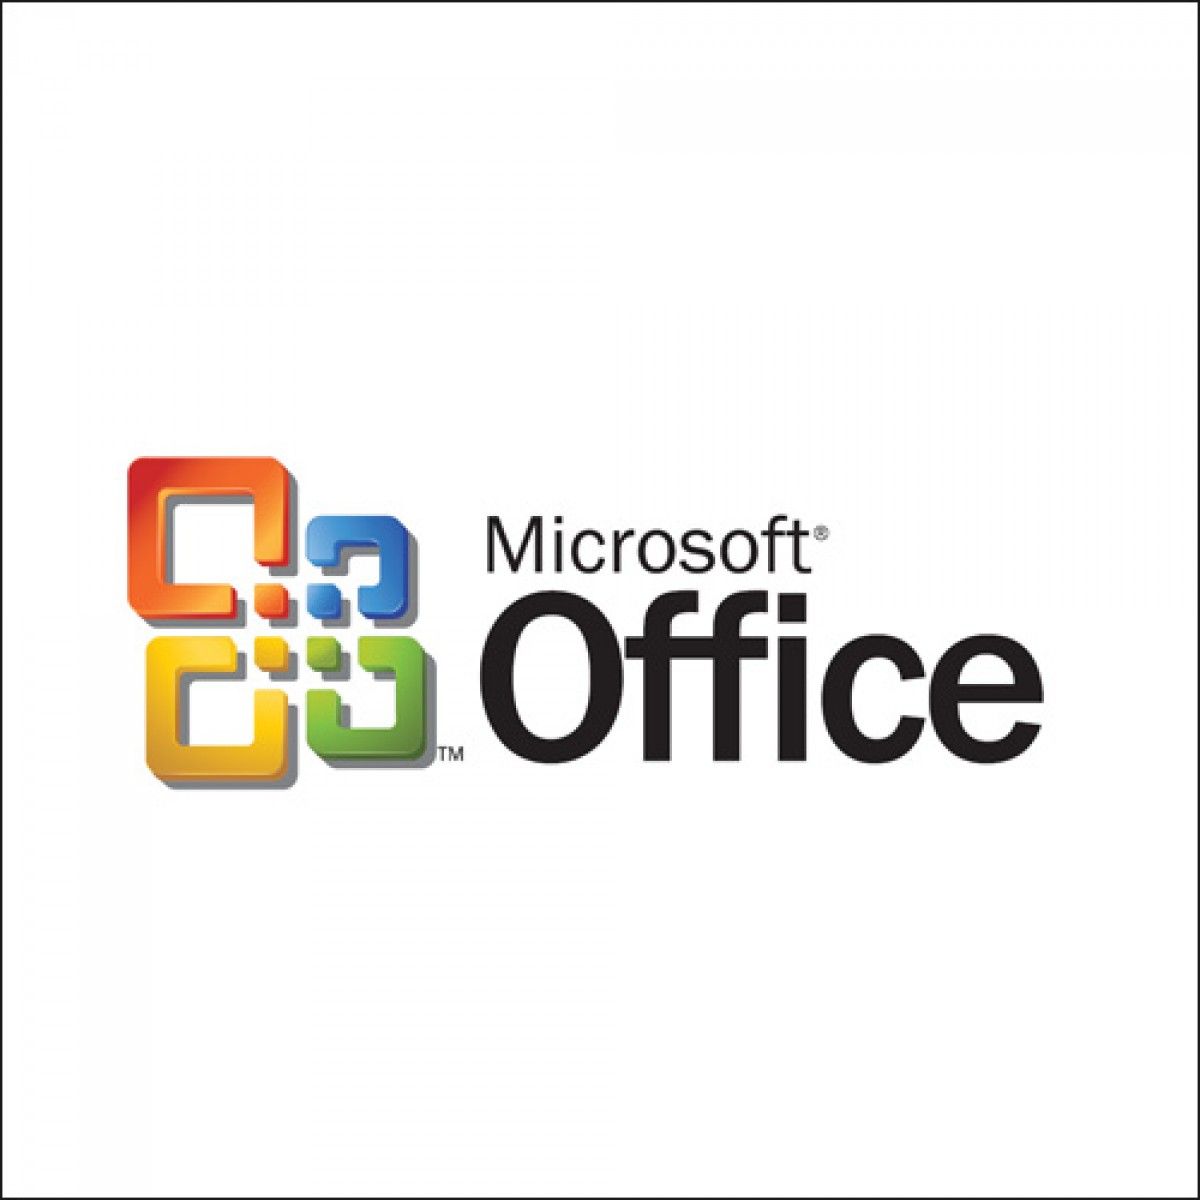 Microsoft Office Wallpaper